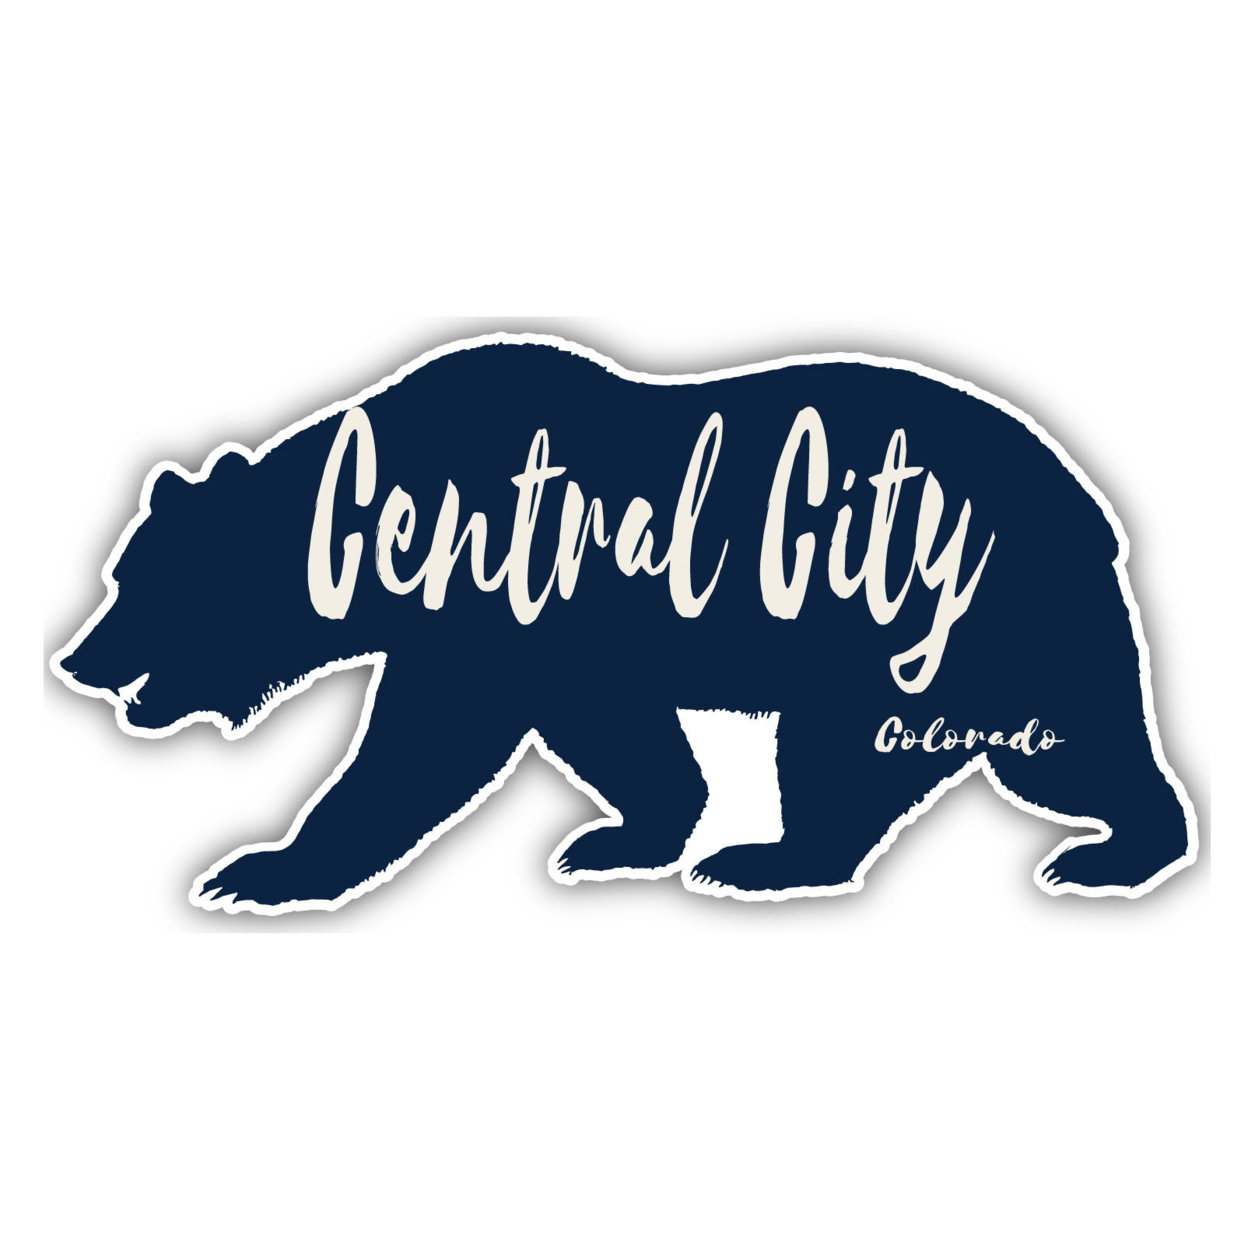 Central City Colorado Souvenir Decorative Stickers (Choose Theme And Size) - Single Unit, 10-Inch, Camp Life